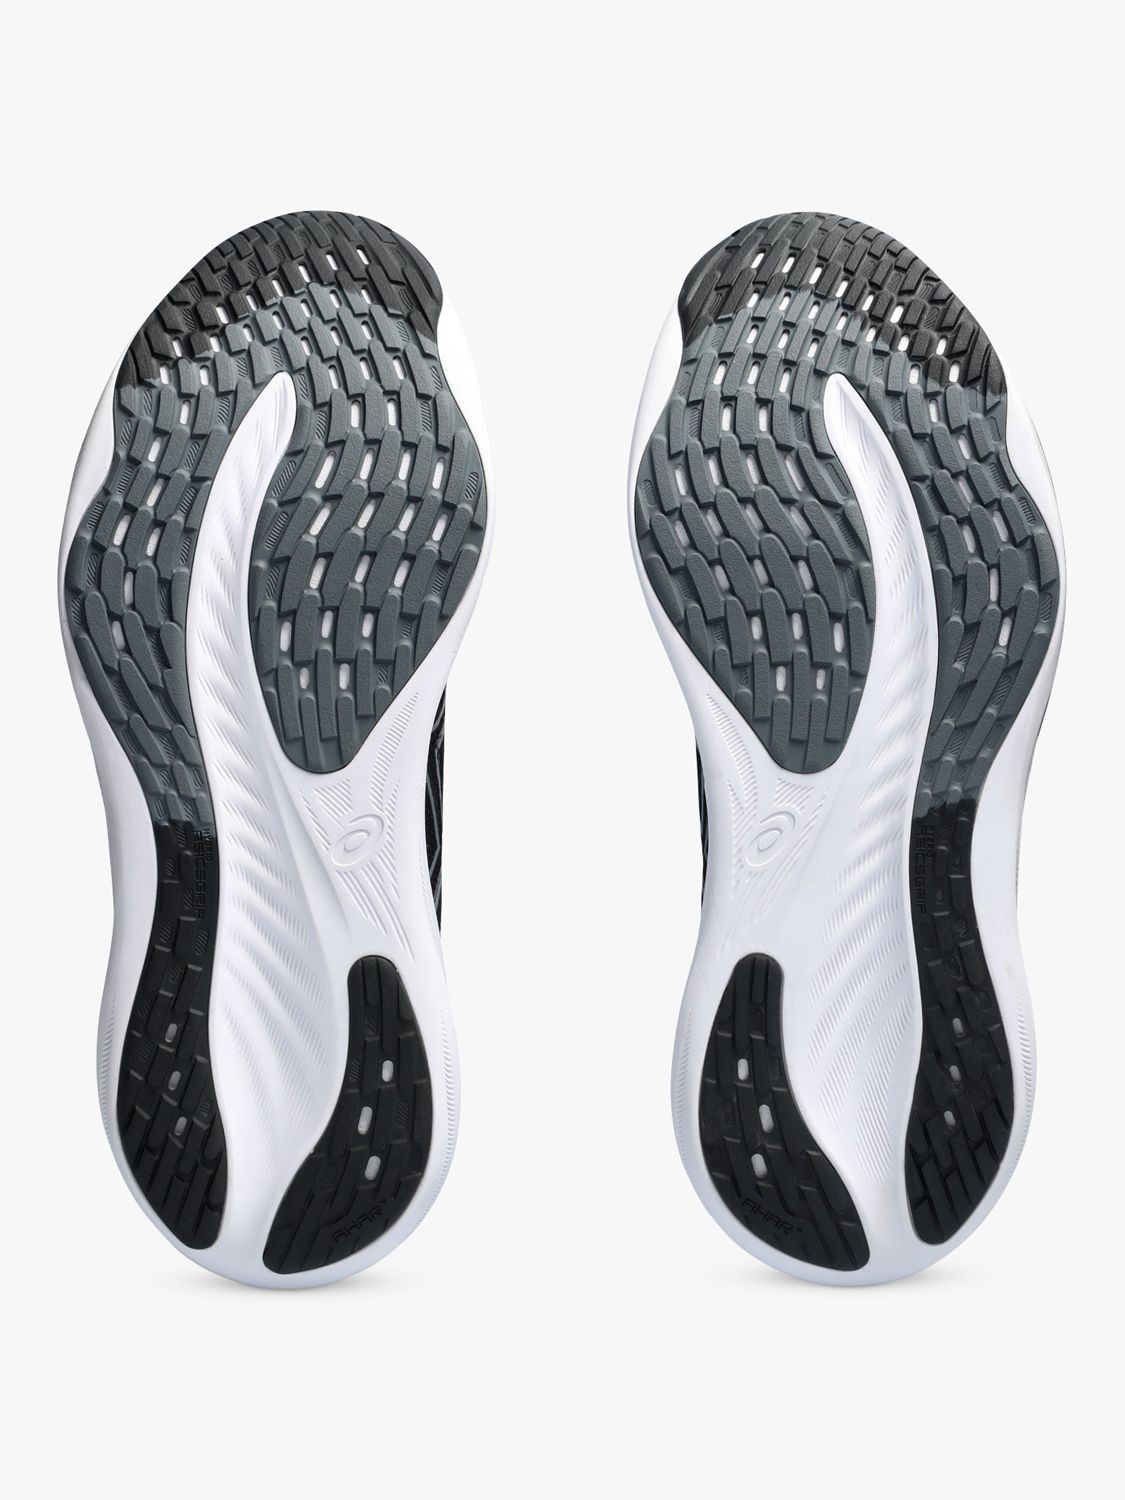 ASICS GEL-NIMBUS 26 Men's Running Shoes, Black/Graphite Grey, 10.5